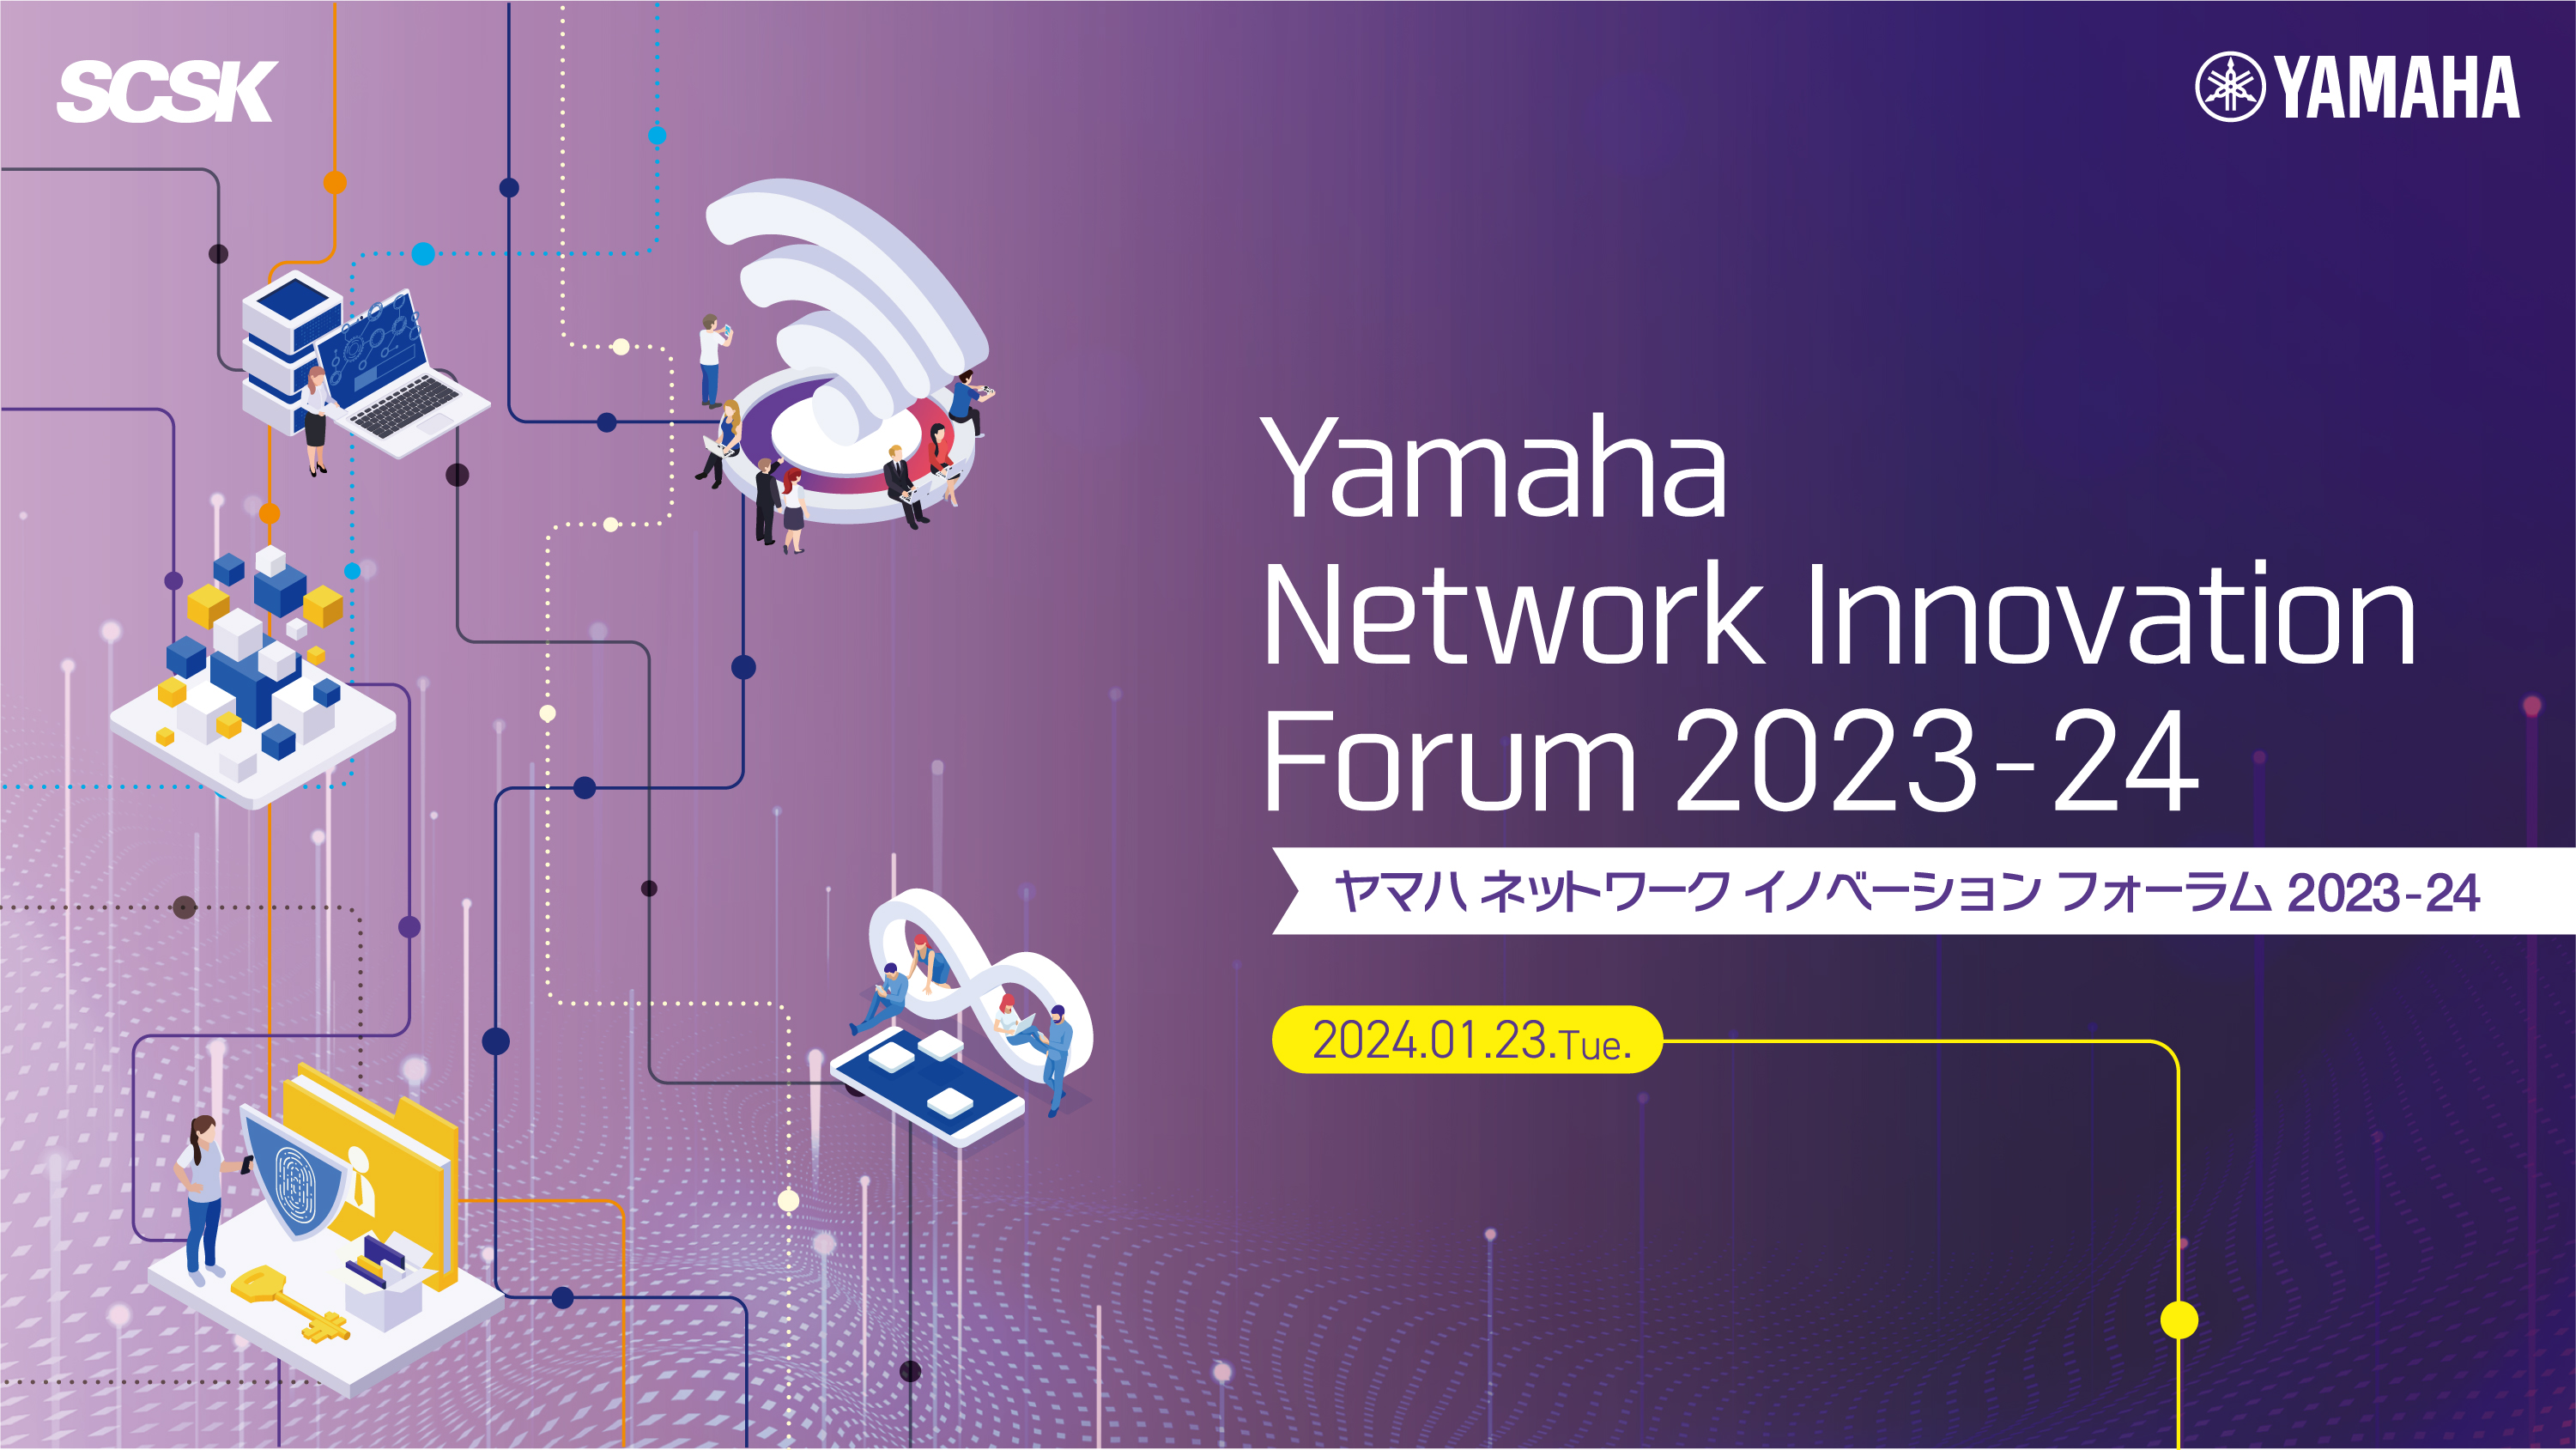 Yamaha Network Innovation Forum 2023-24